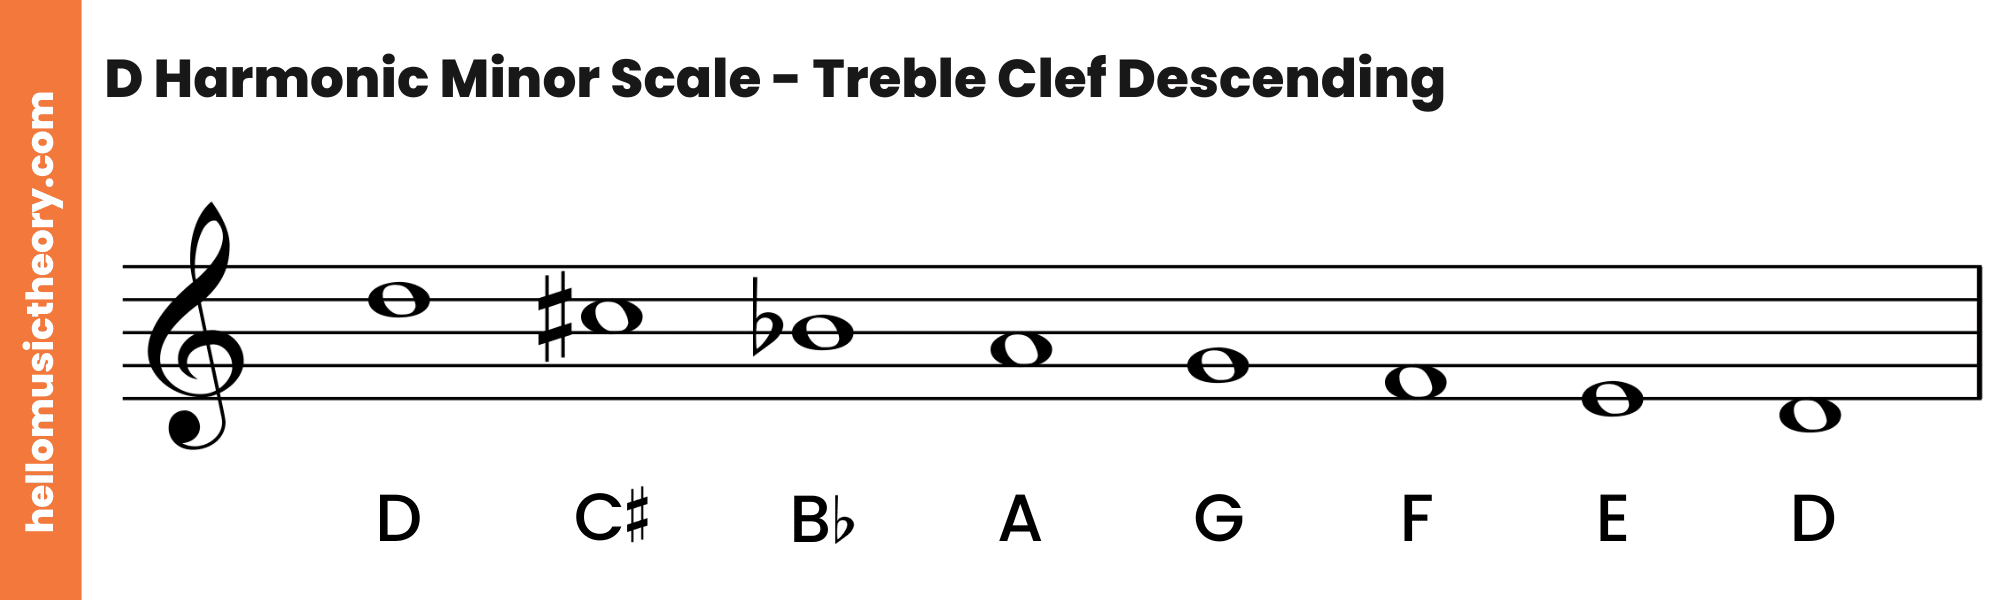 D Harmonic Minor Scale Treble Clef Descending